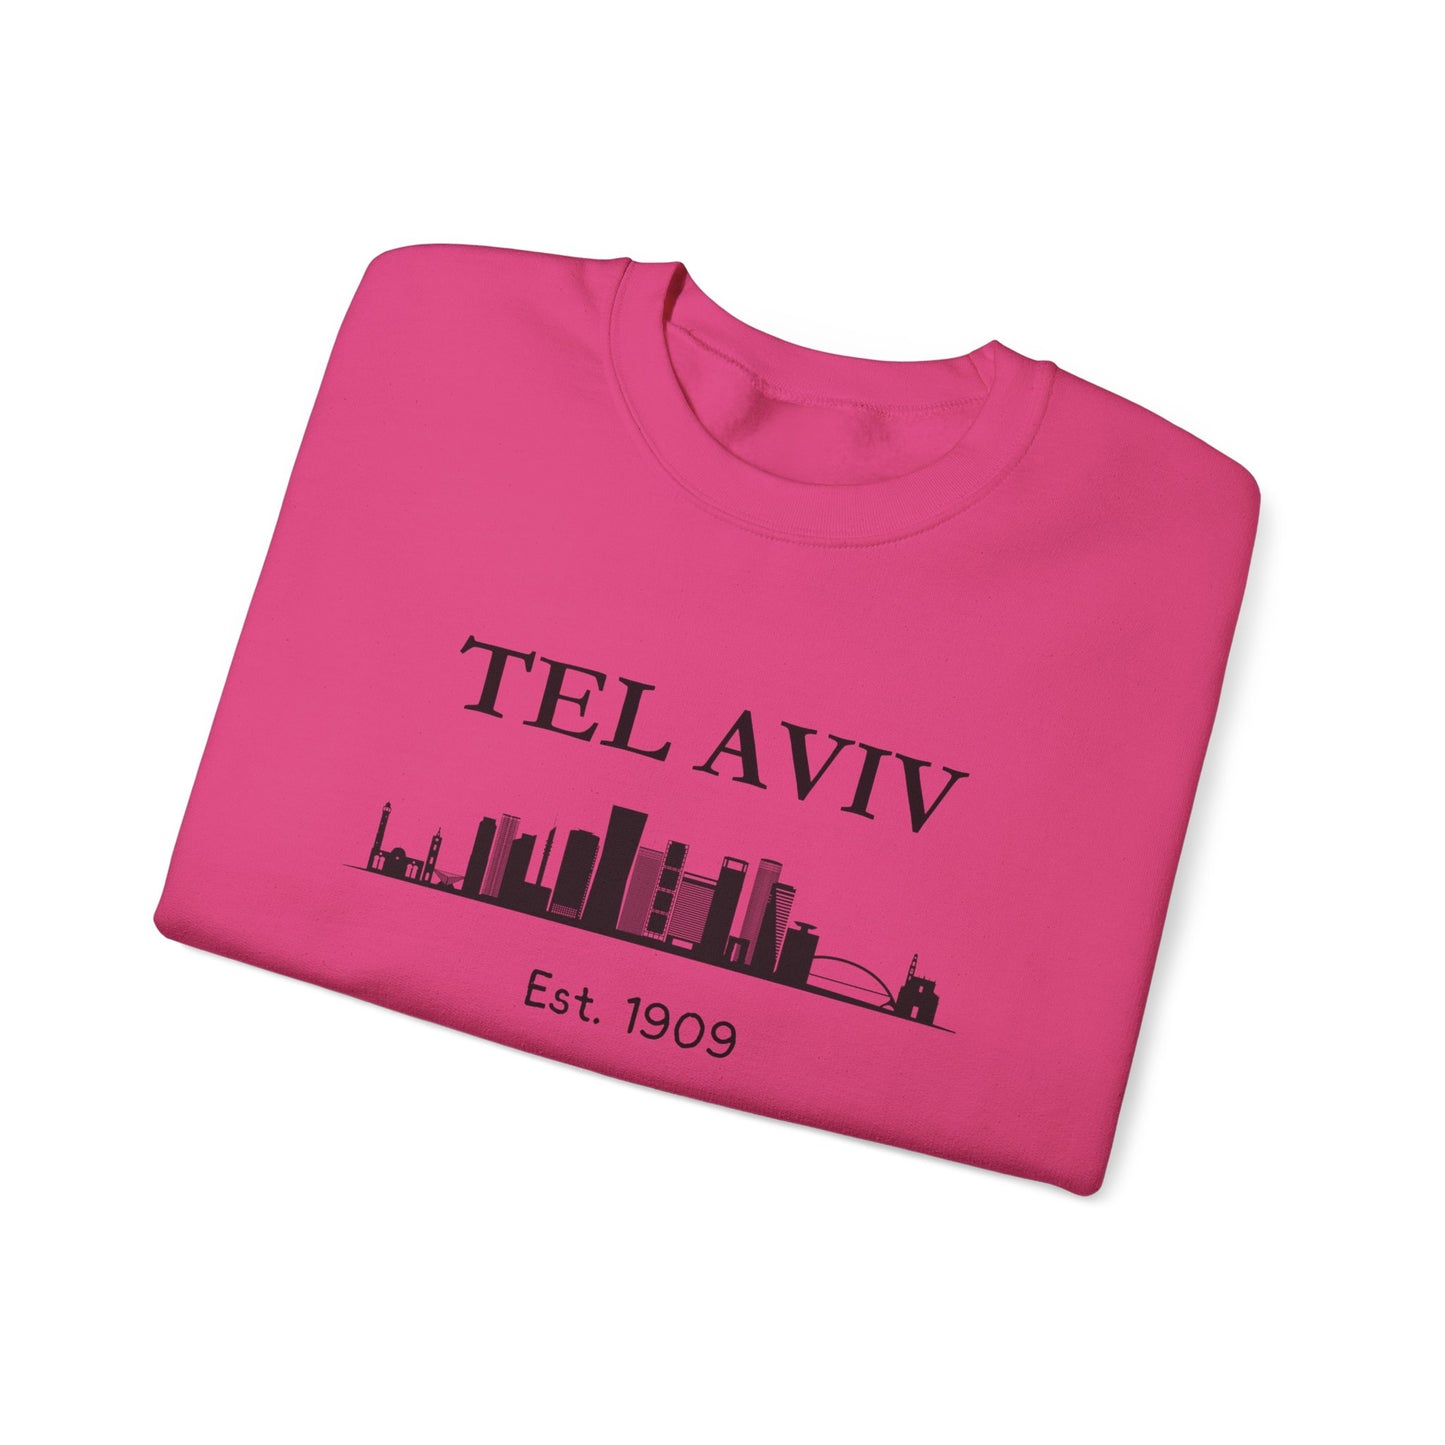 Tel Aviv Sweatshirt